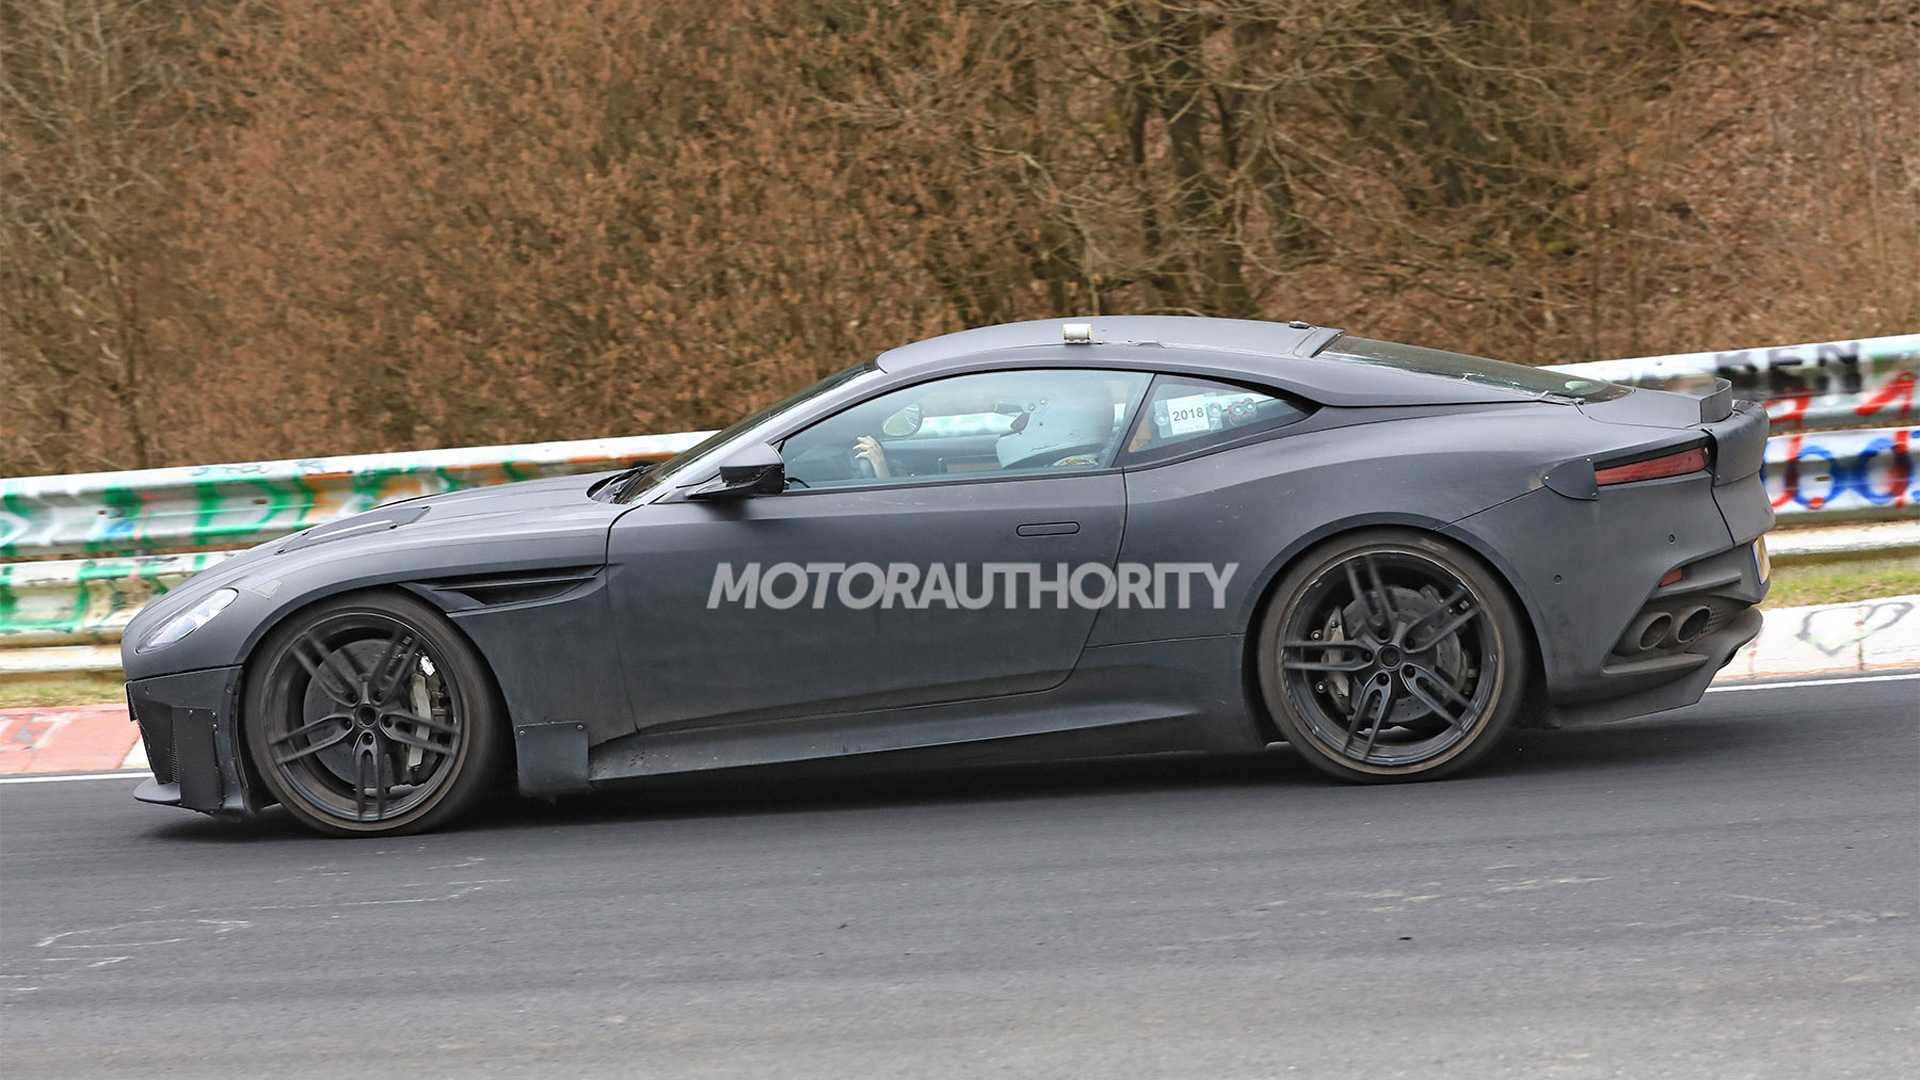 2020 Aston Martin DBS Superleggera spy shots - Image via S. Baldauf/SB-Medien